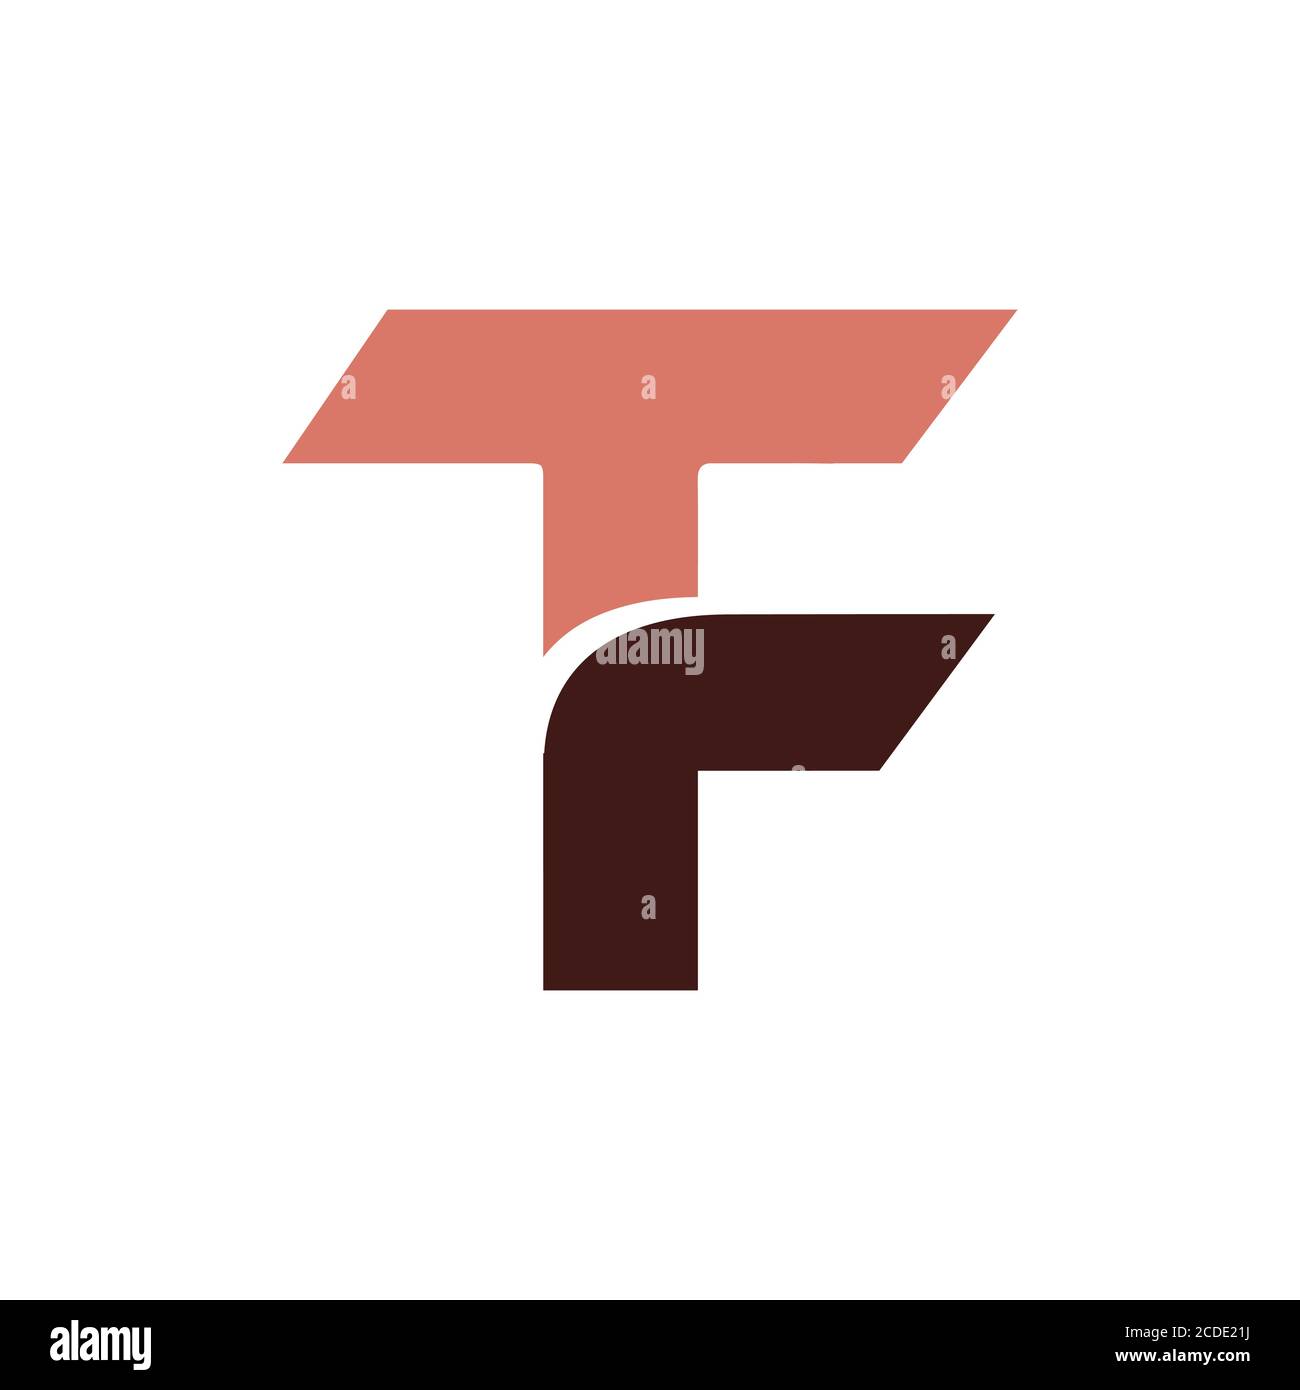 Initial letter tf logo or ft logo vector design template Stock Vector